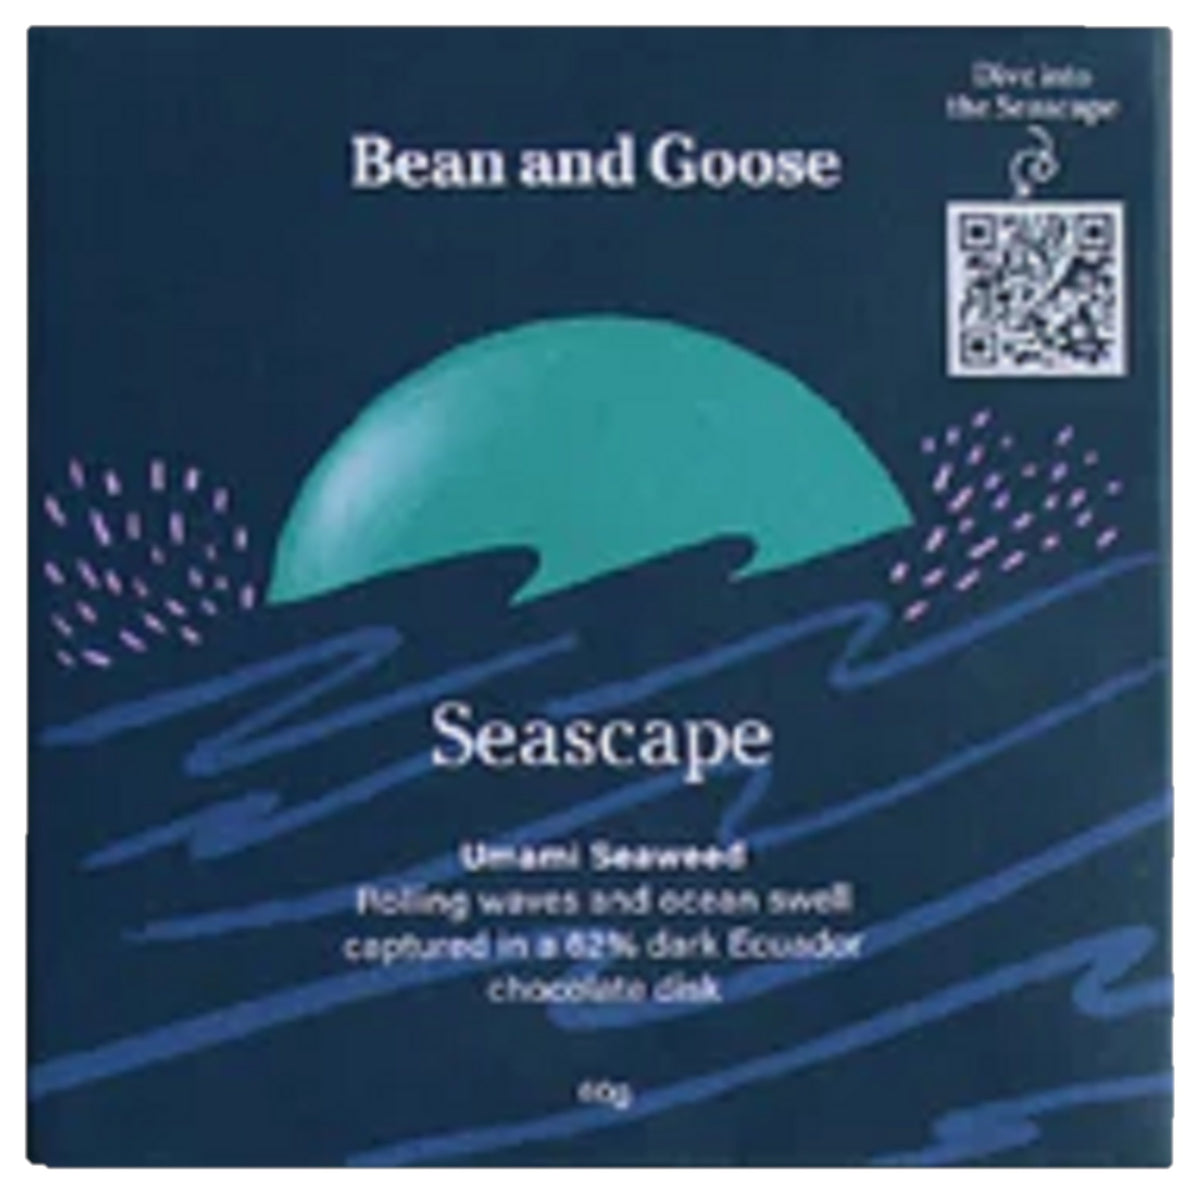 Bean and Goose Seascape Umami Seaweed 60g